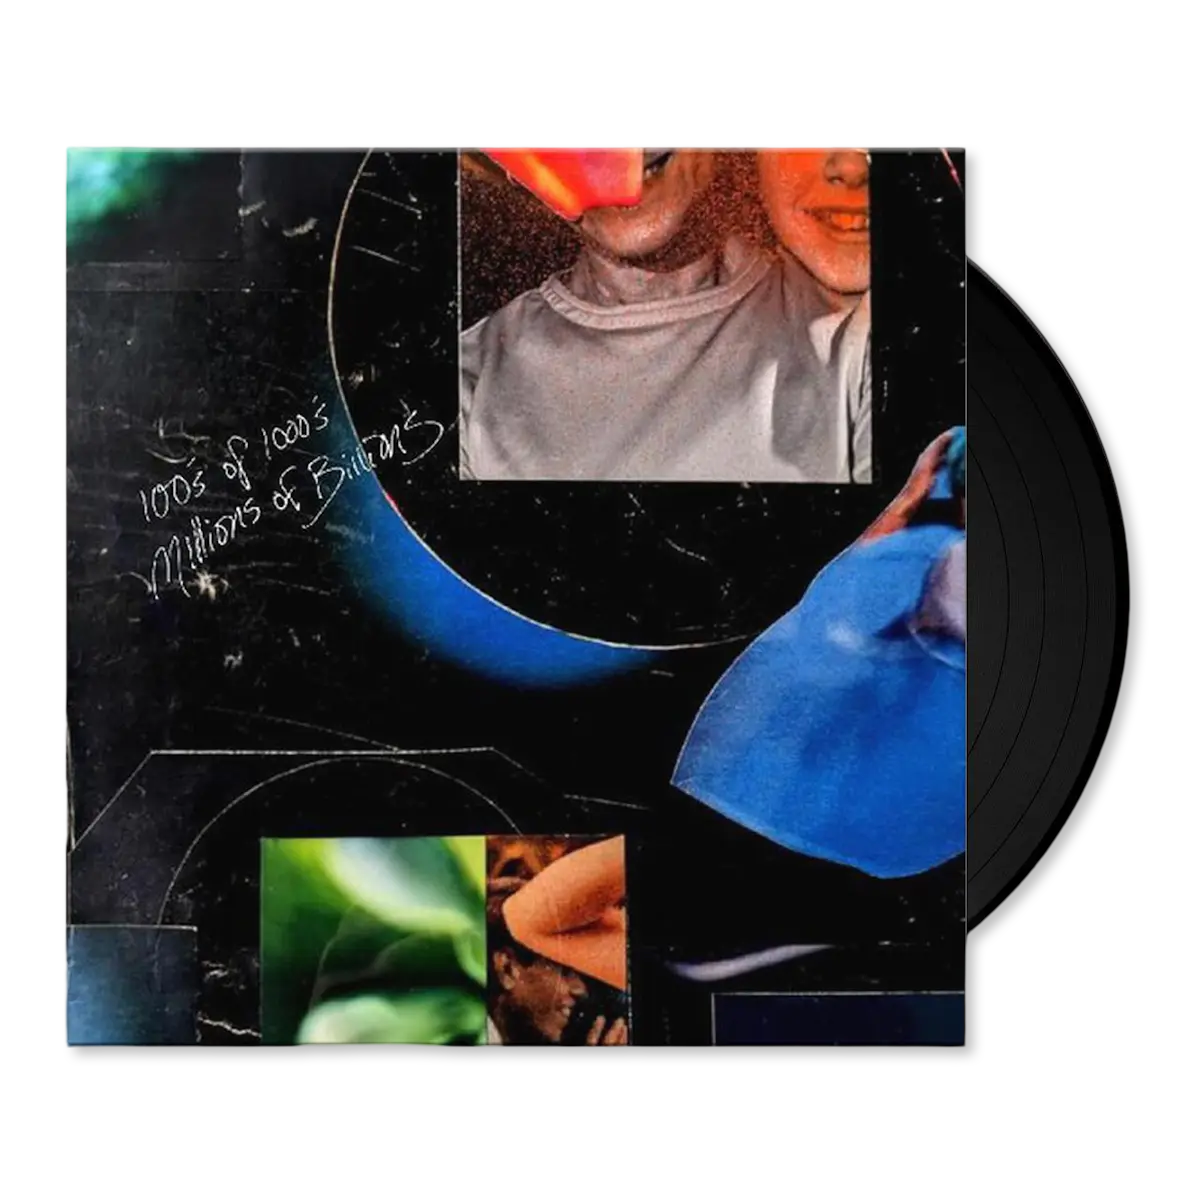 Blitzen Trapper: 100's of 1000's, Millions of Billions Vinyl LP